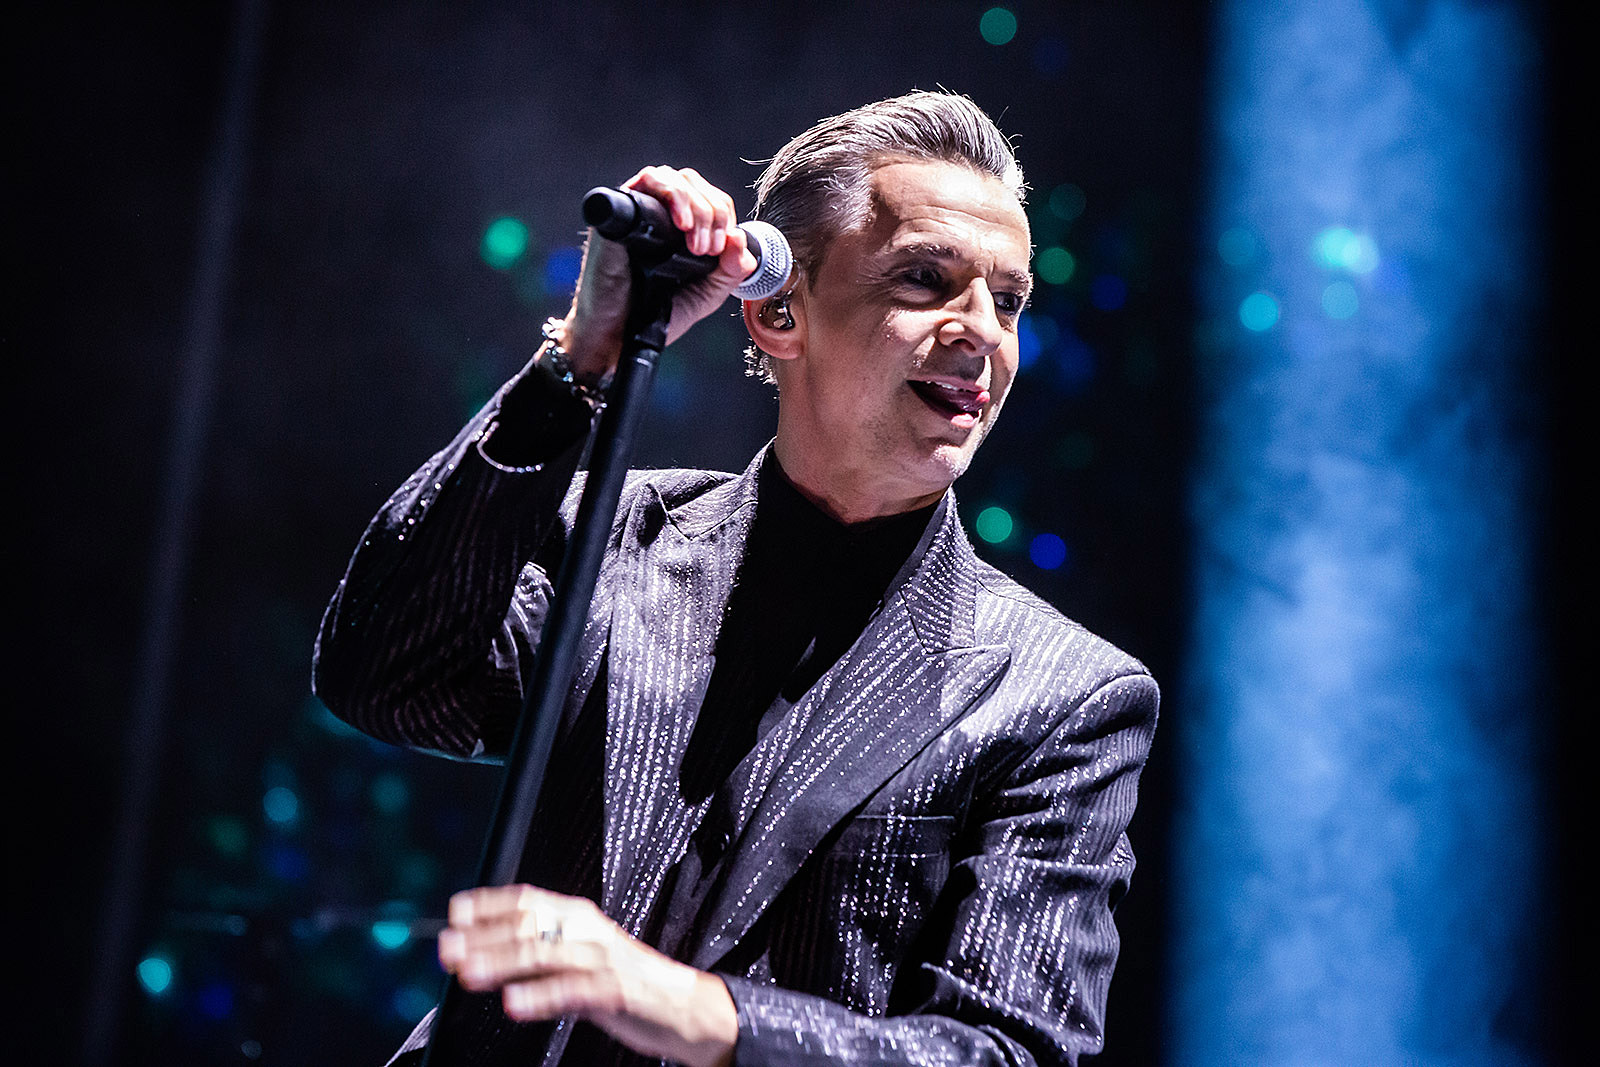 Depeche Mode at Madison Square Garden